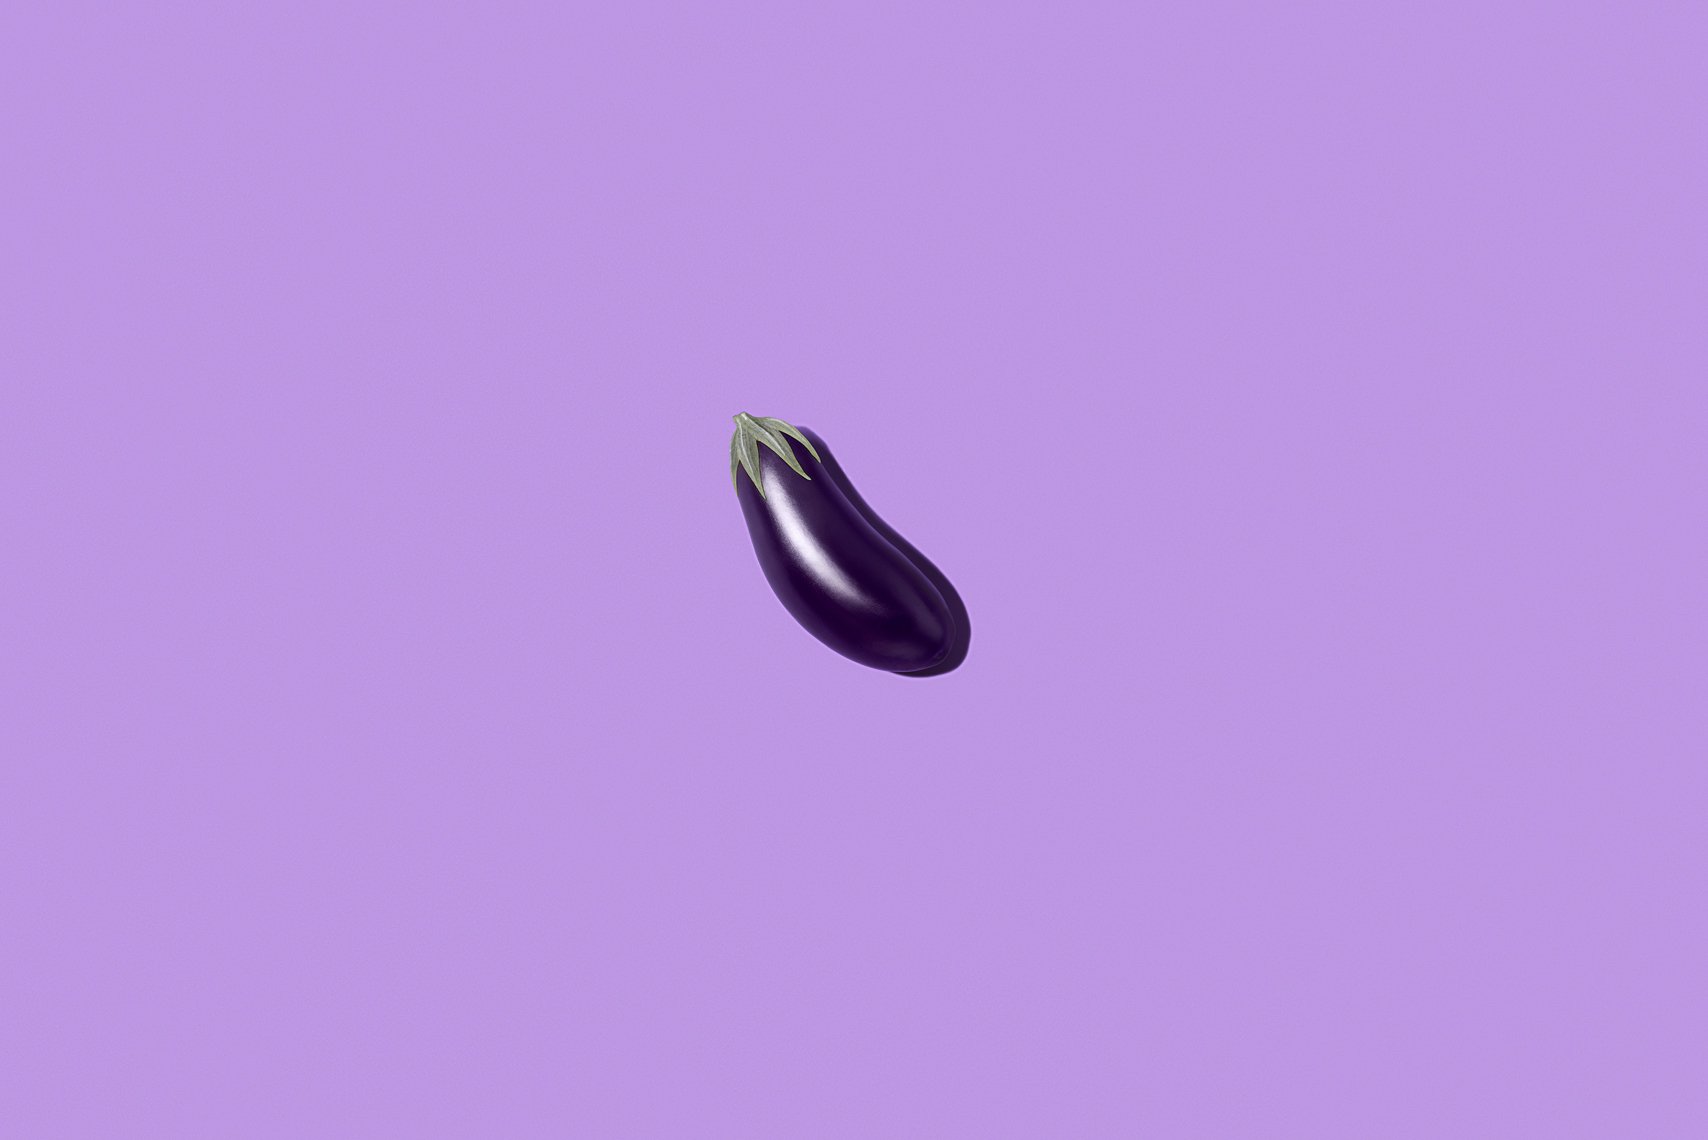 🍆 // Conceptual image of an eggplant